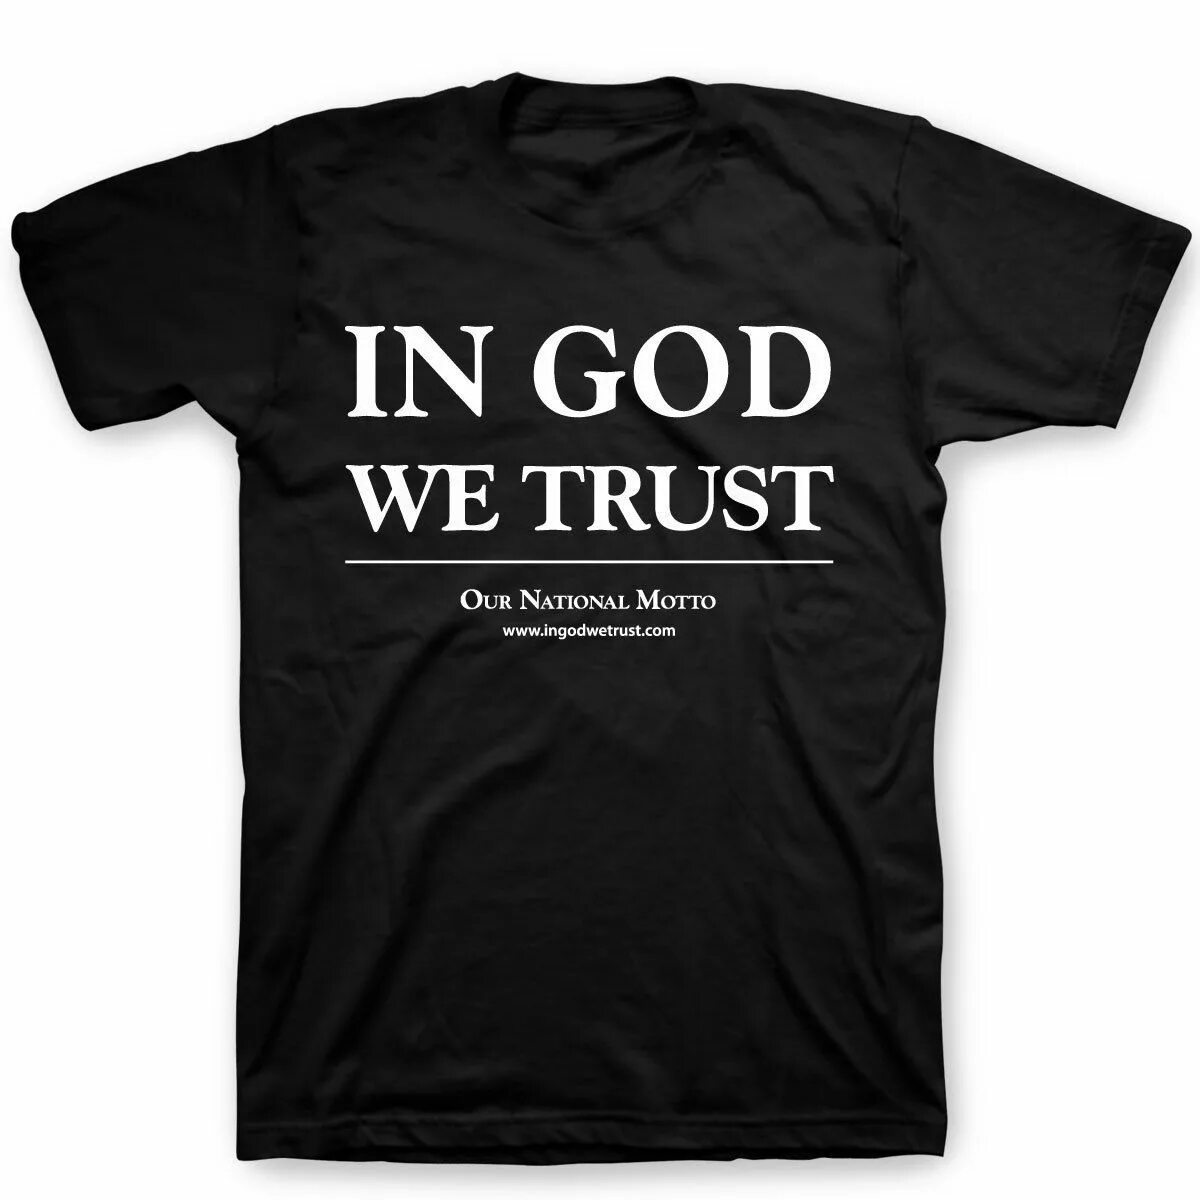 Перевод in god we trust на русский. Футболка Trust in God. In Gods we Trust. In God we Trust футболка. Футболка с надписью Trust in God.